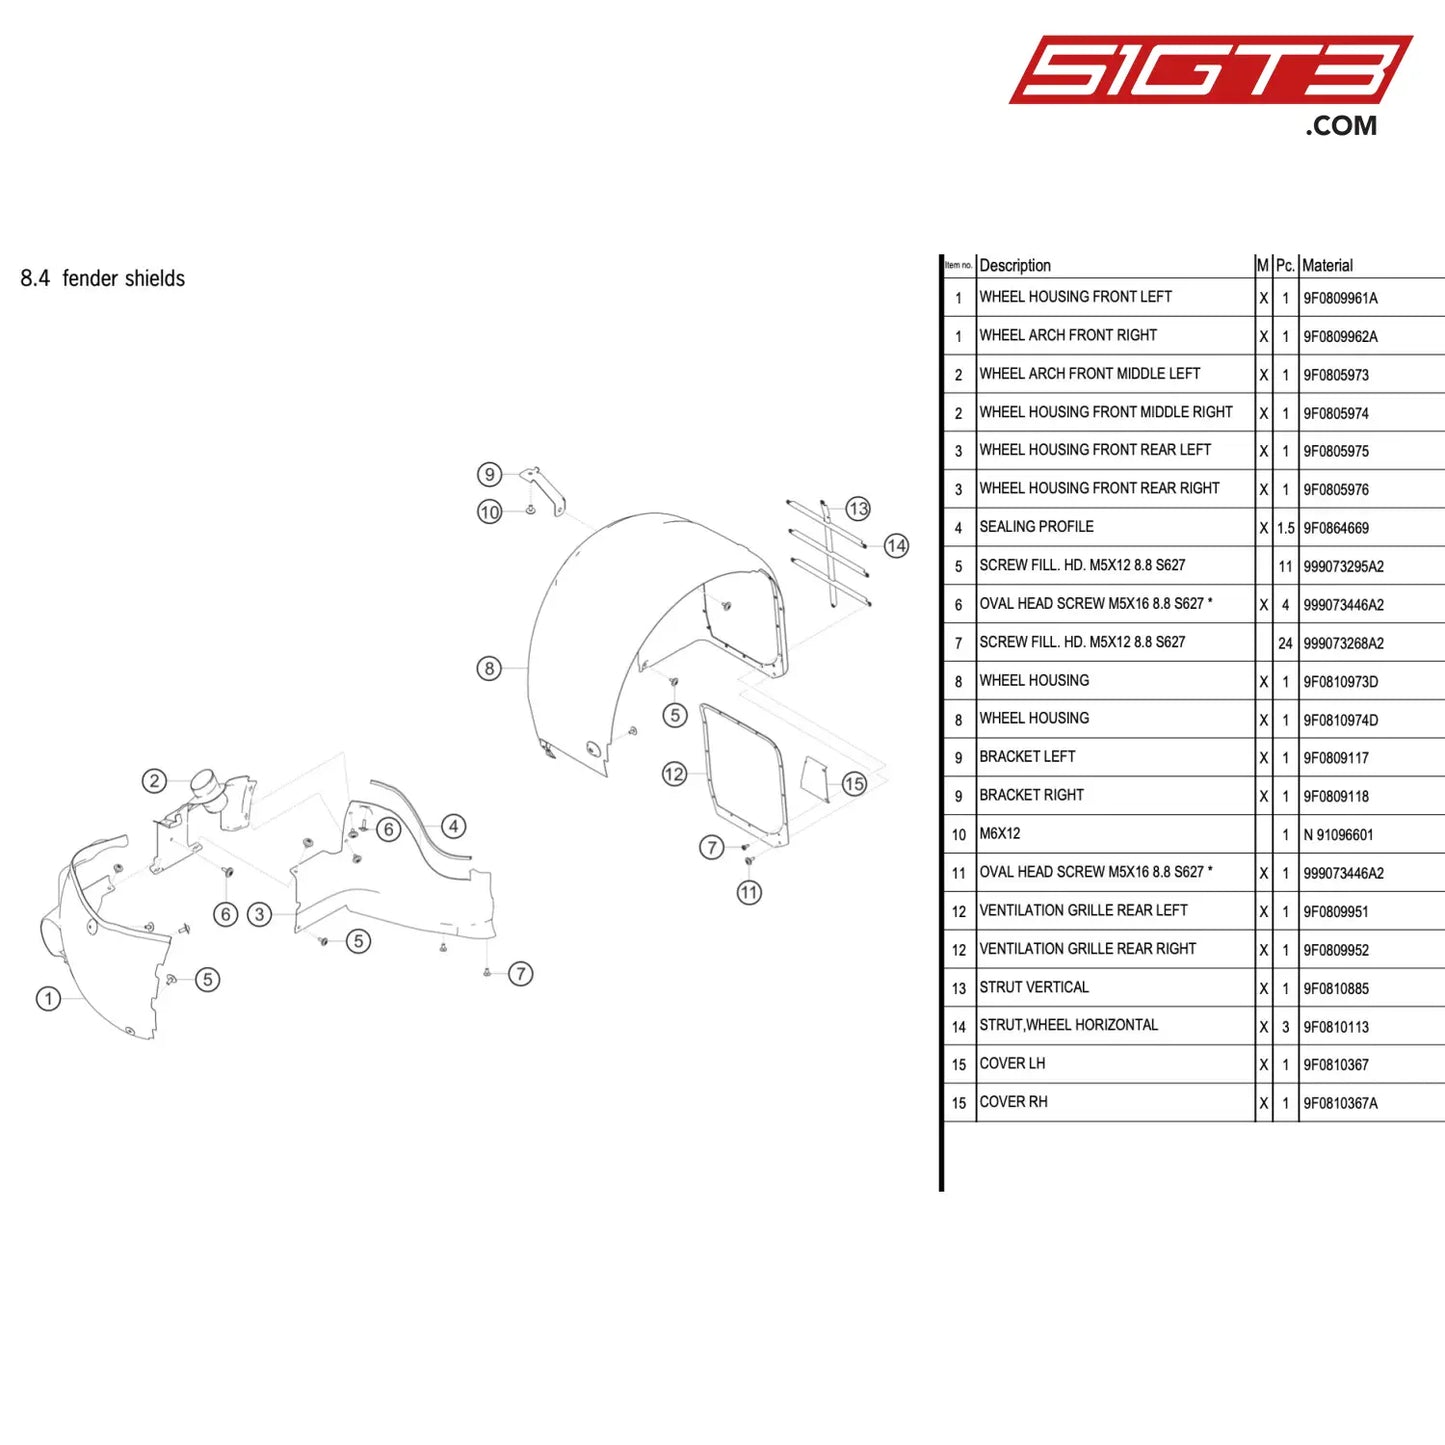 Strut Wheel Horizontal - 9F0810113 [Porsche 911 Gt3 R Type 991 (Gen 2)] Fender Shields